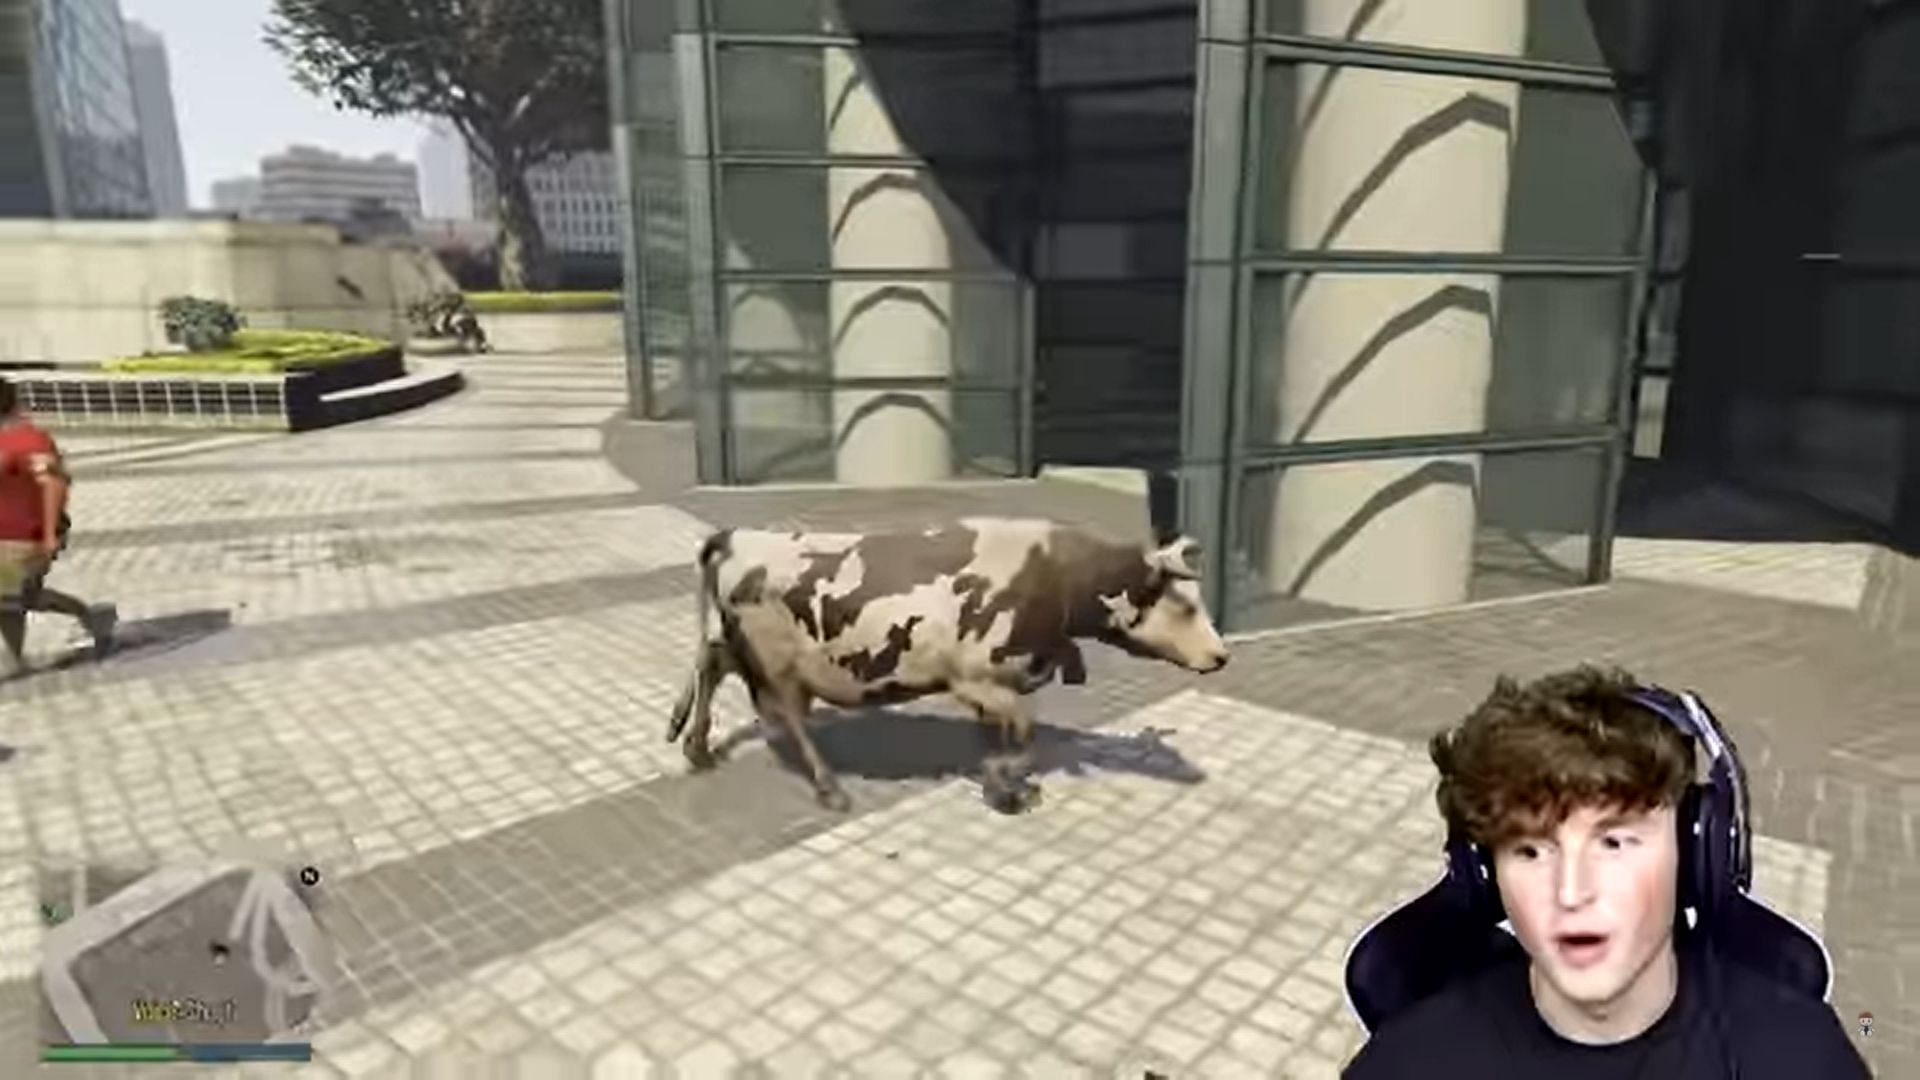 Caylus as cattle in GTA 5 using mods (Image via Sportskeeda)